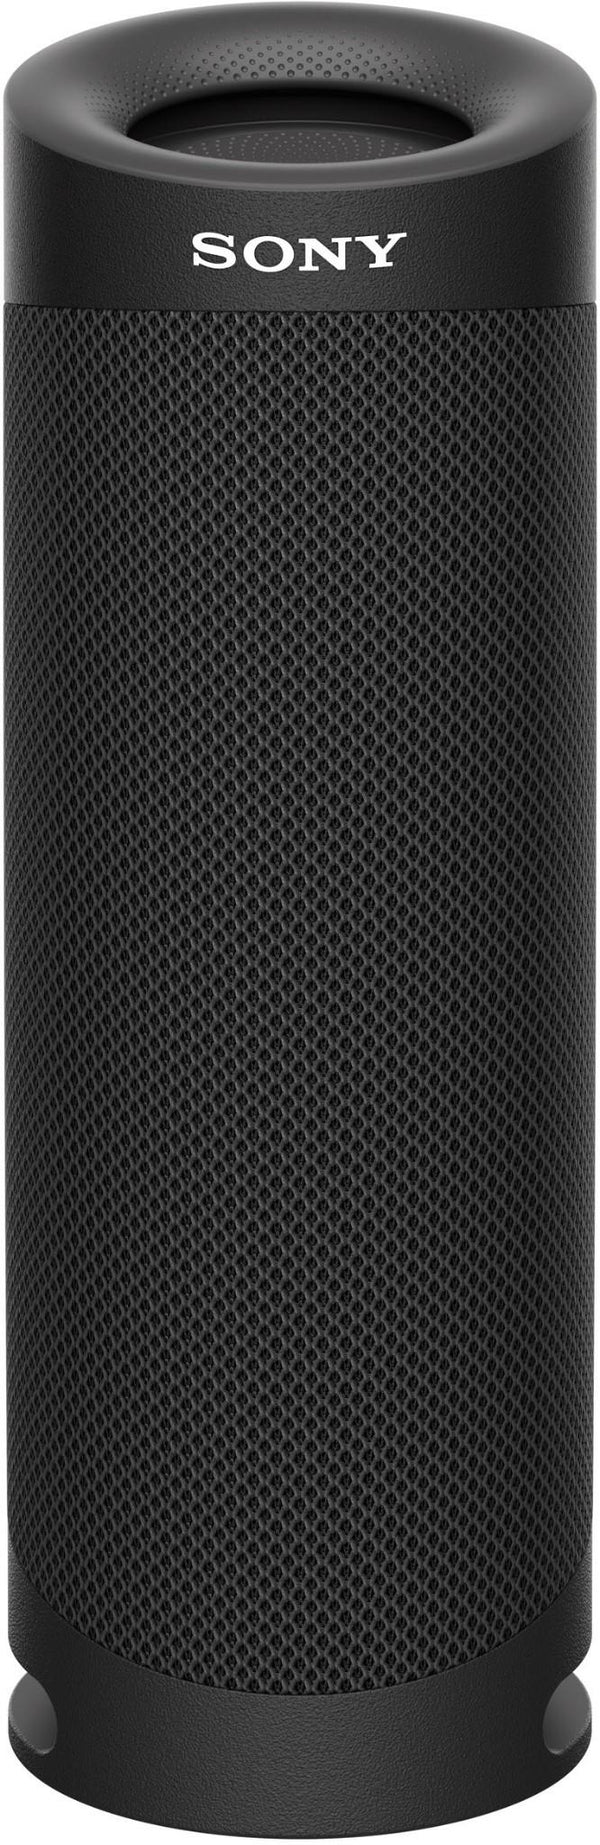  Sony srs-xb23 extra bass portable bluetooth speaker (black)